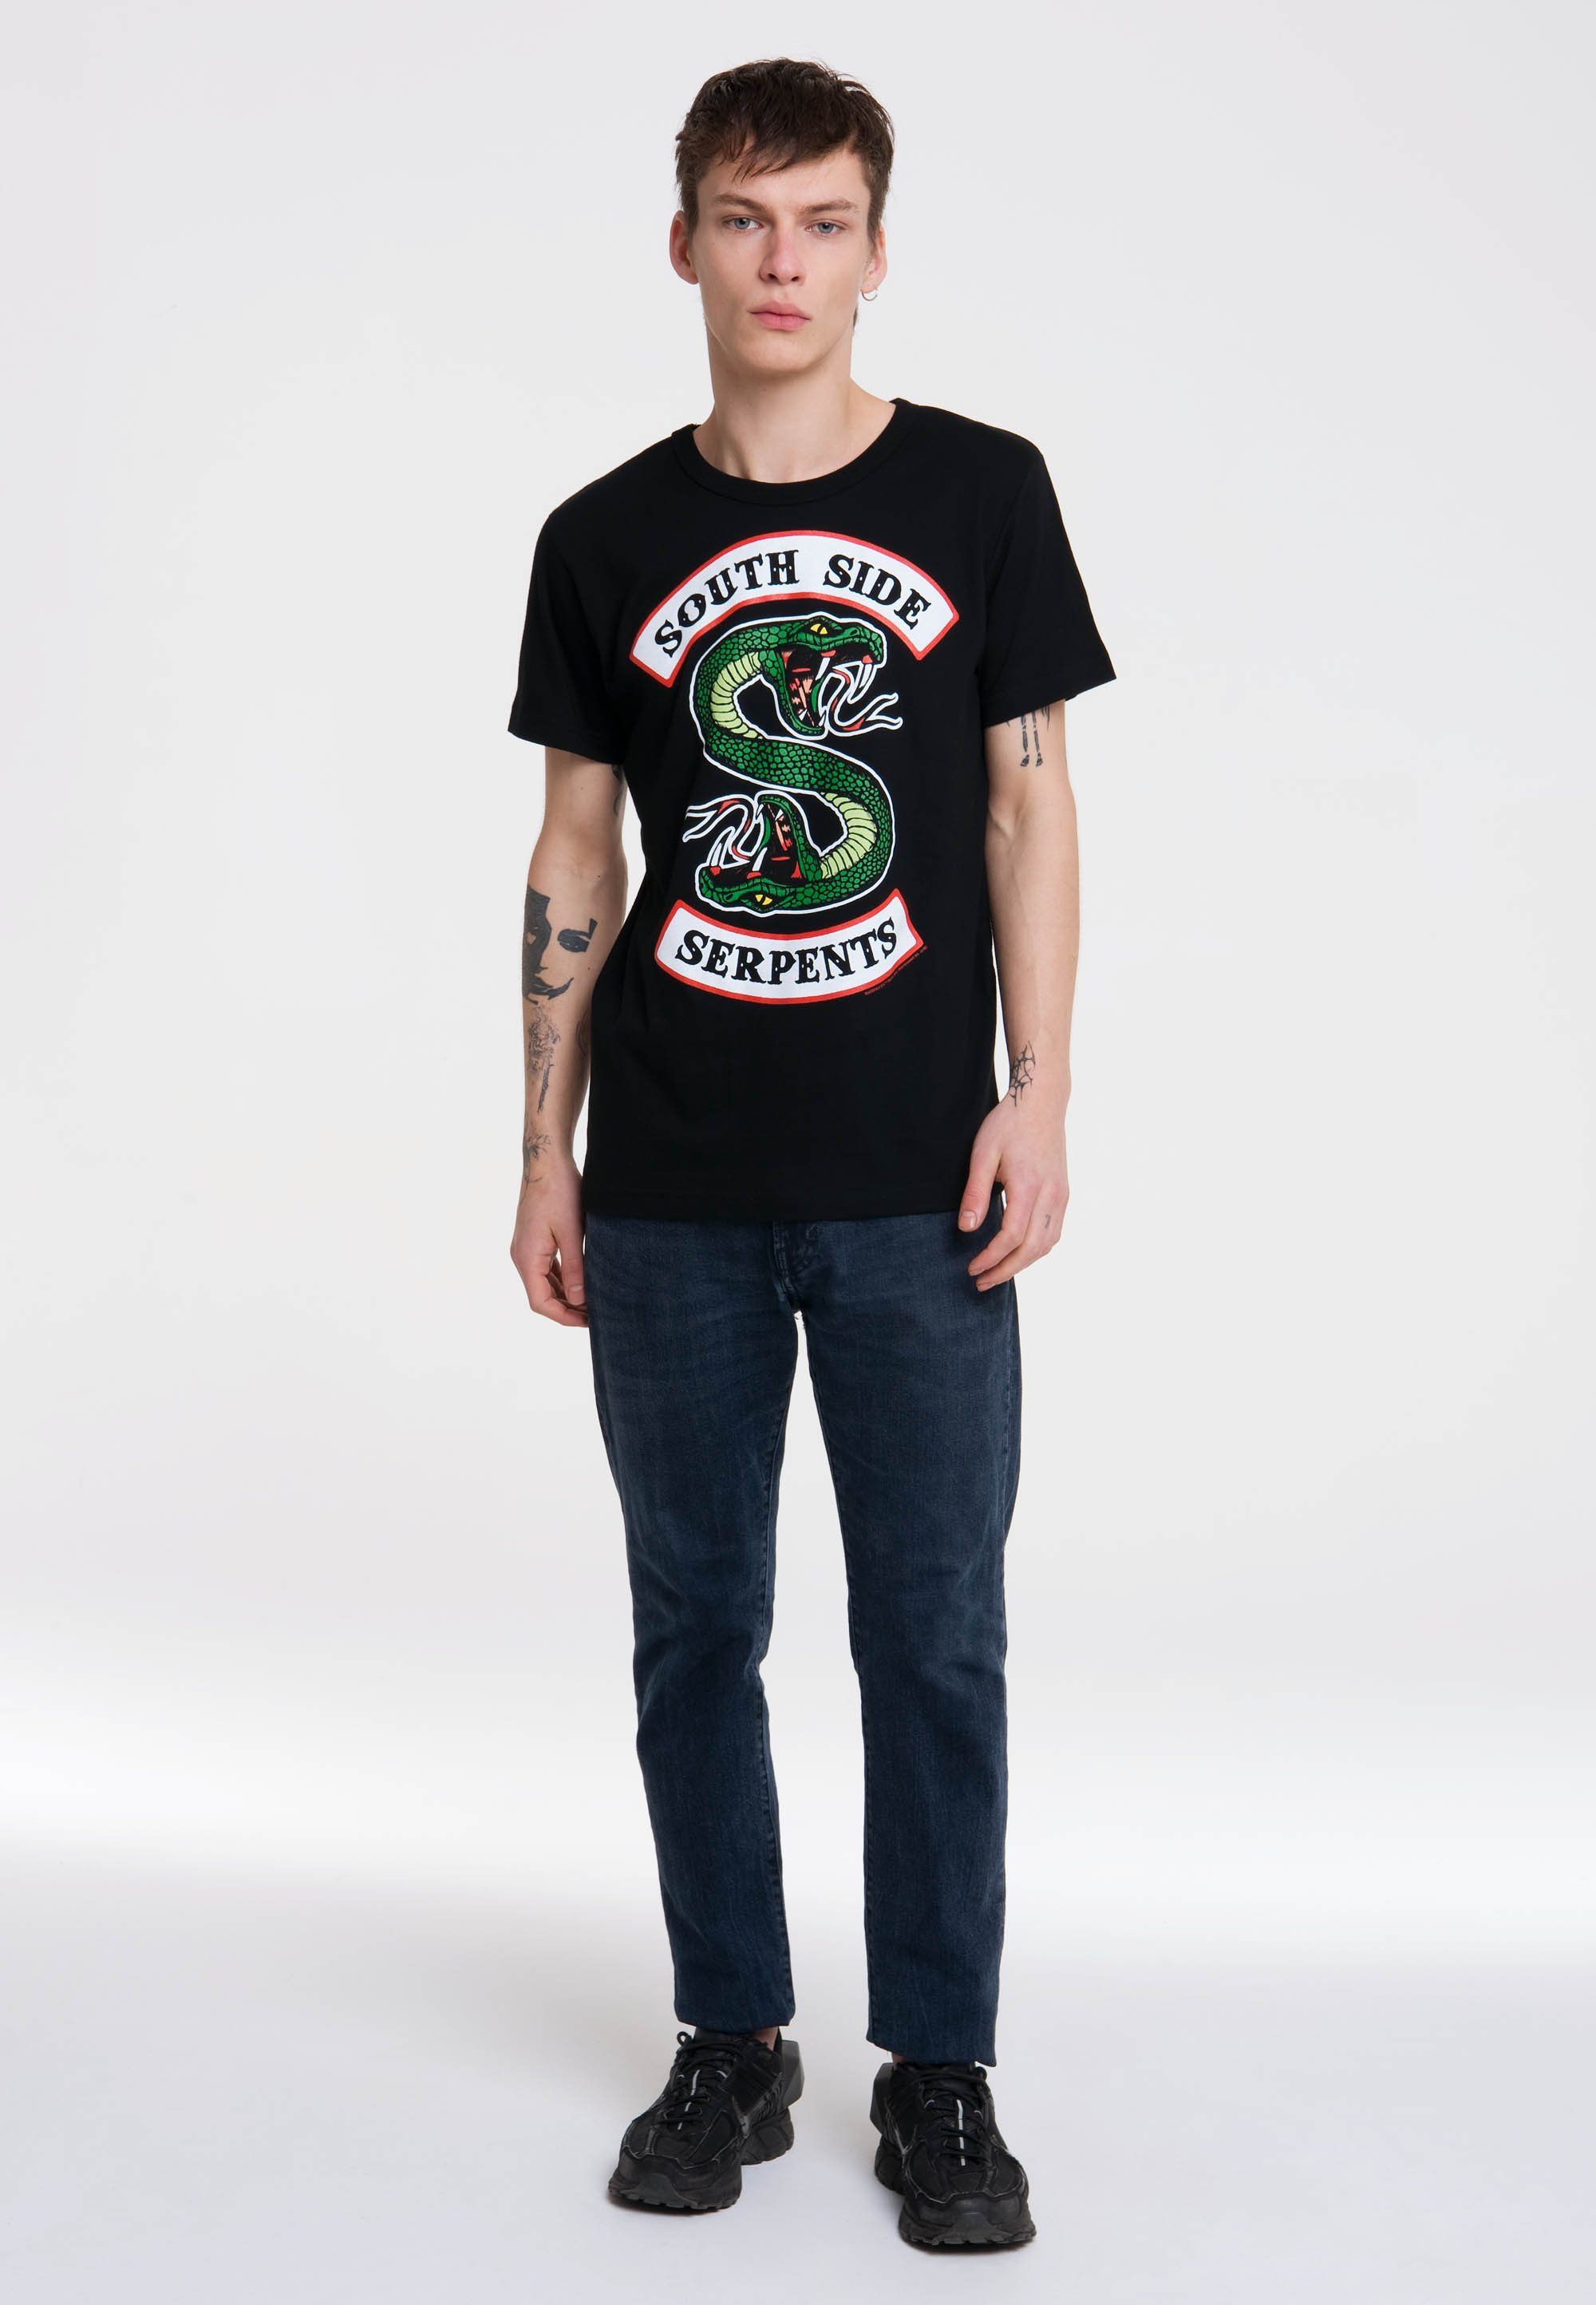 LOGOSHIRT Serpents-Motiv South Side mit T-Shirt Side Serpents - South Riverdale